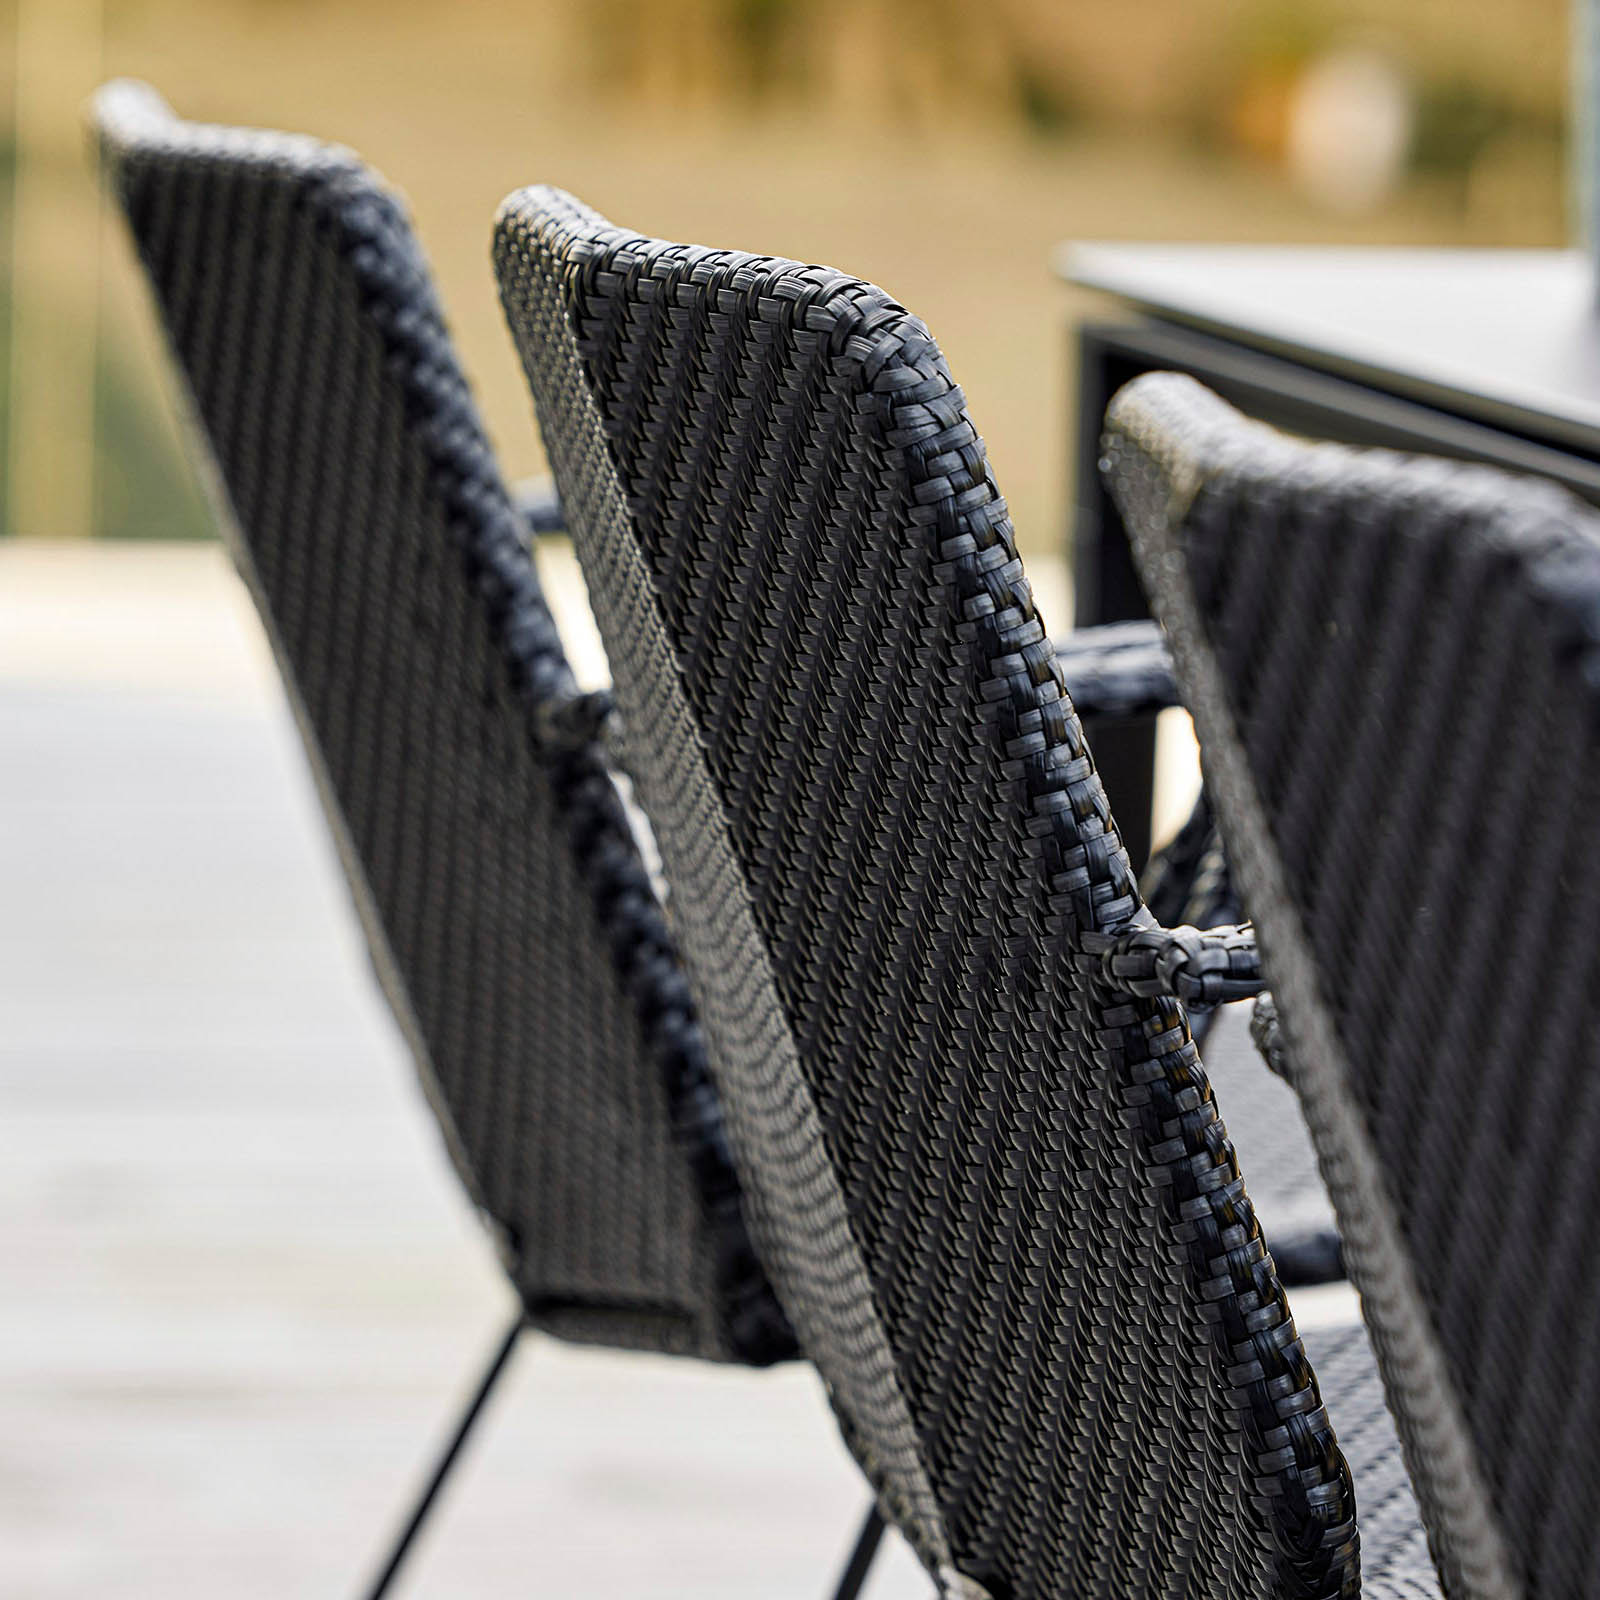 Vision Sessel mit Armlehne aus Cane-line Weave in Graphite